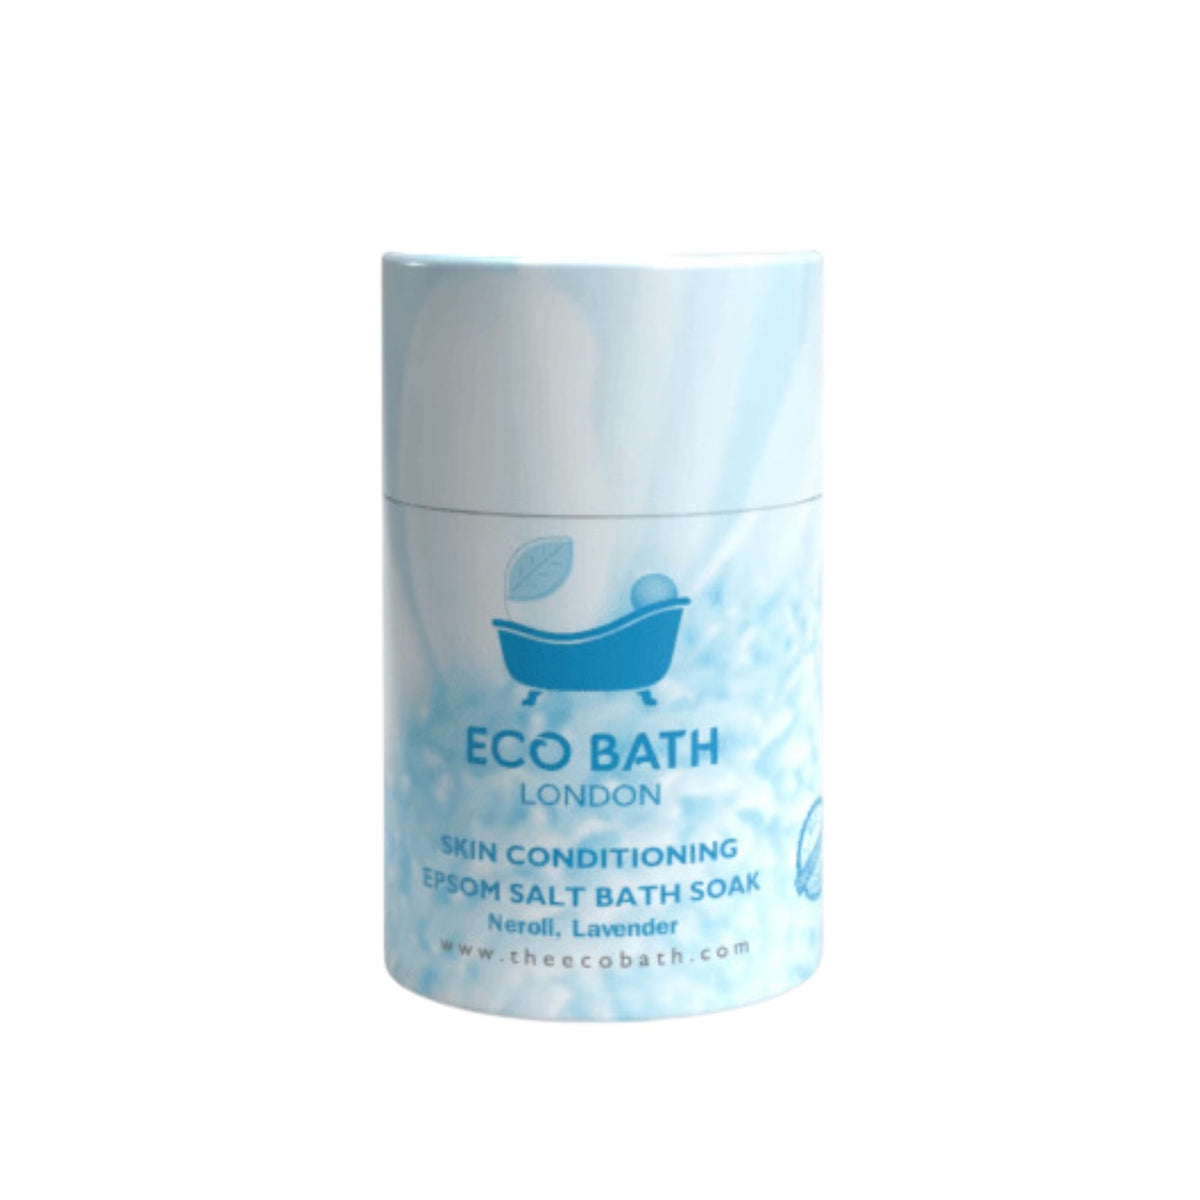 Skin Conditioning Epsom Salt Bath Soak - Tube